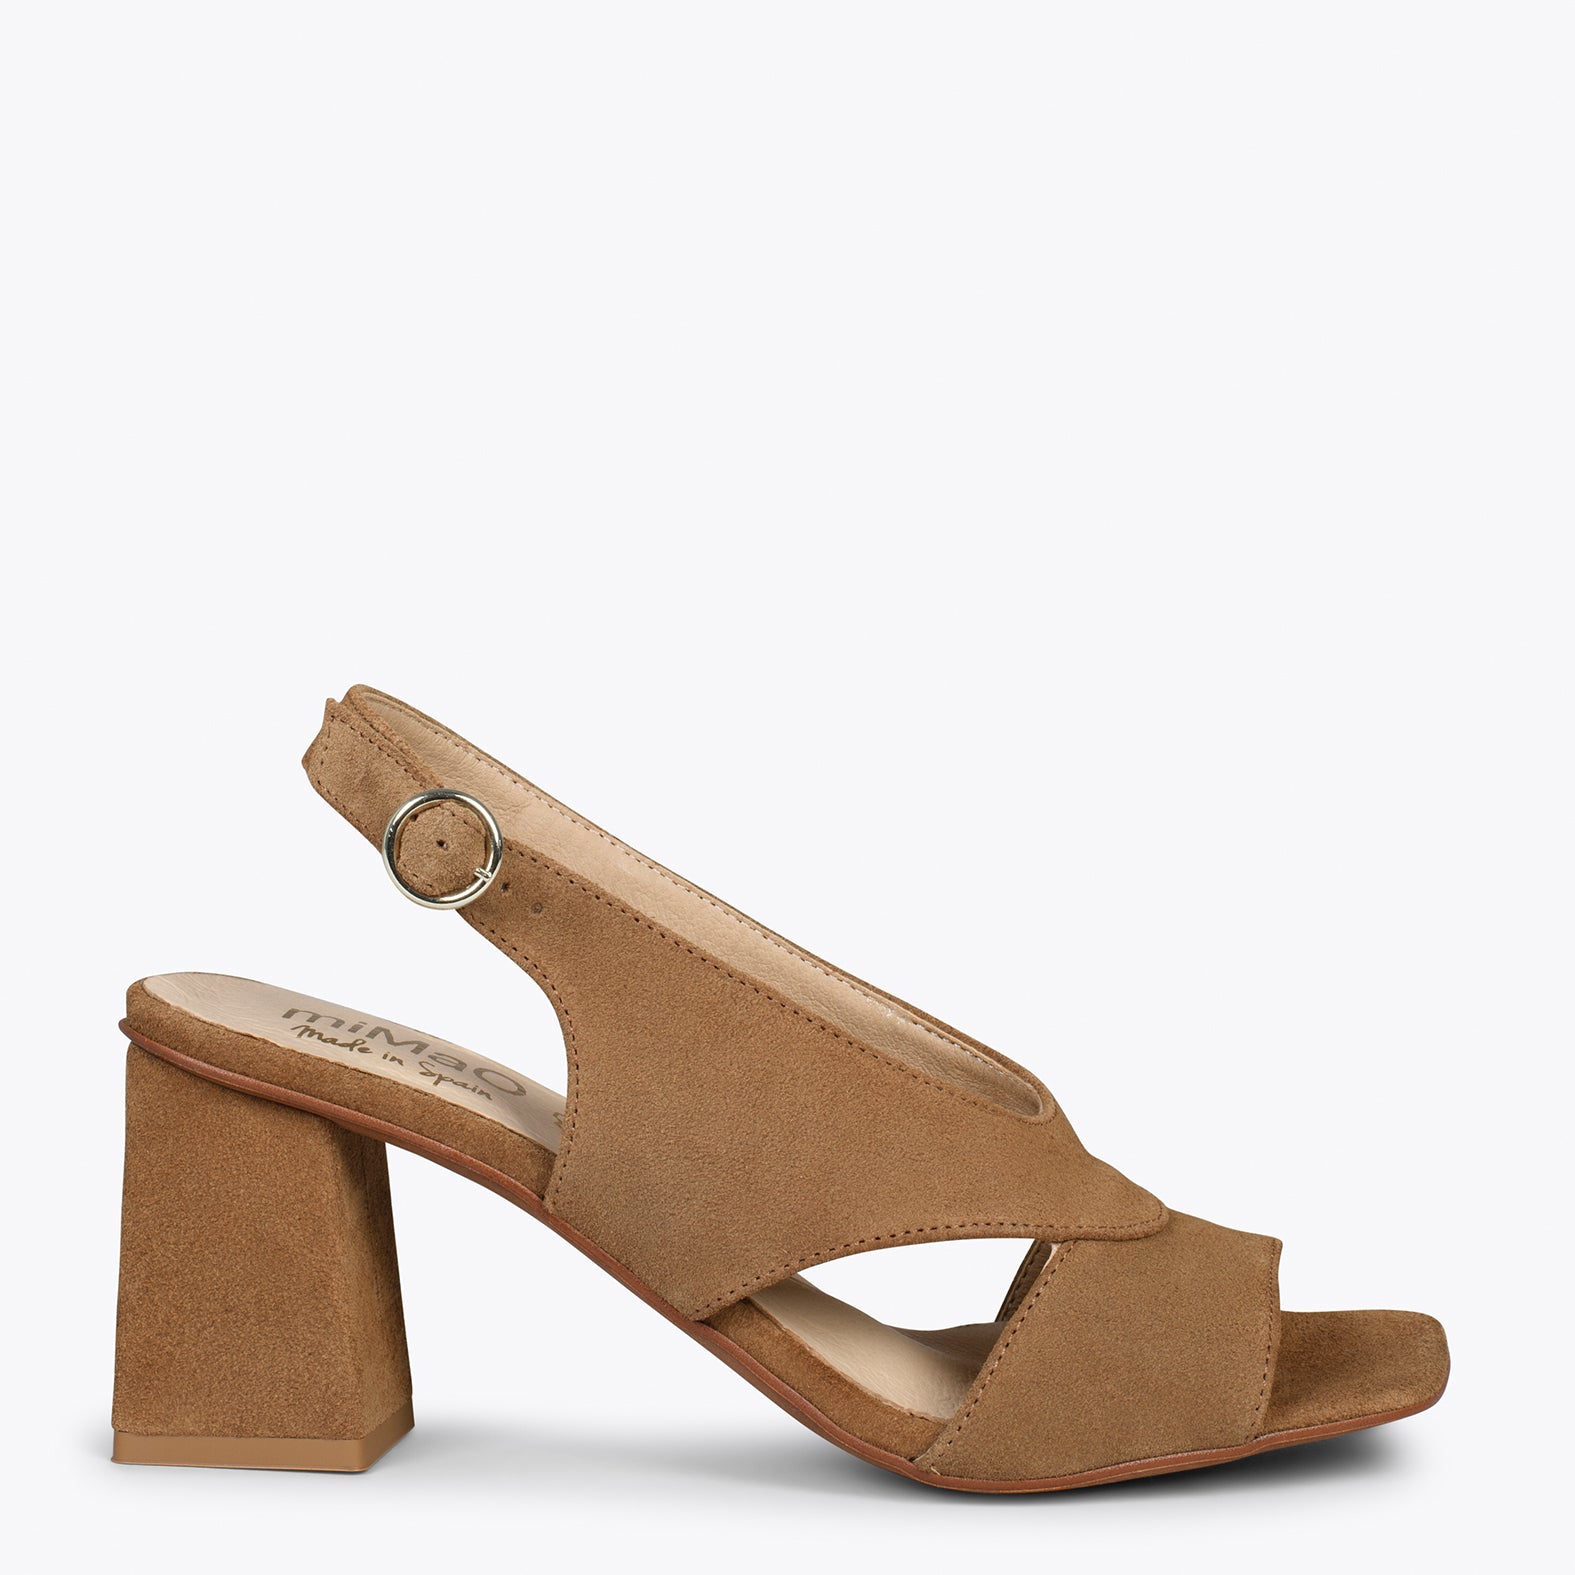 BLOCK – CAMEL sling-back sandals with block heel